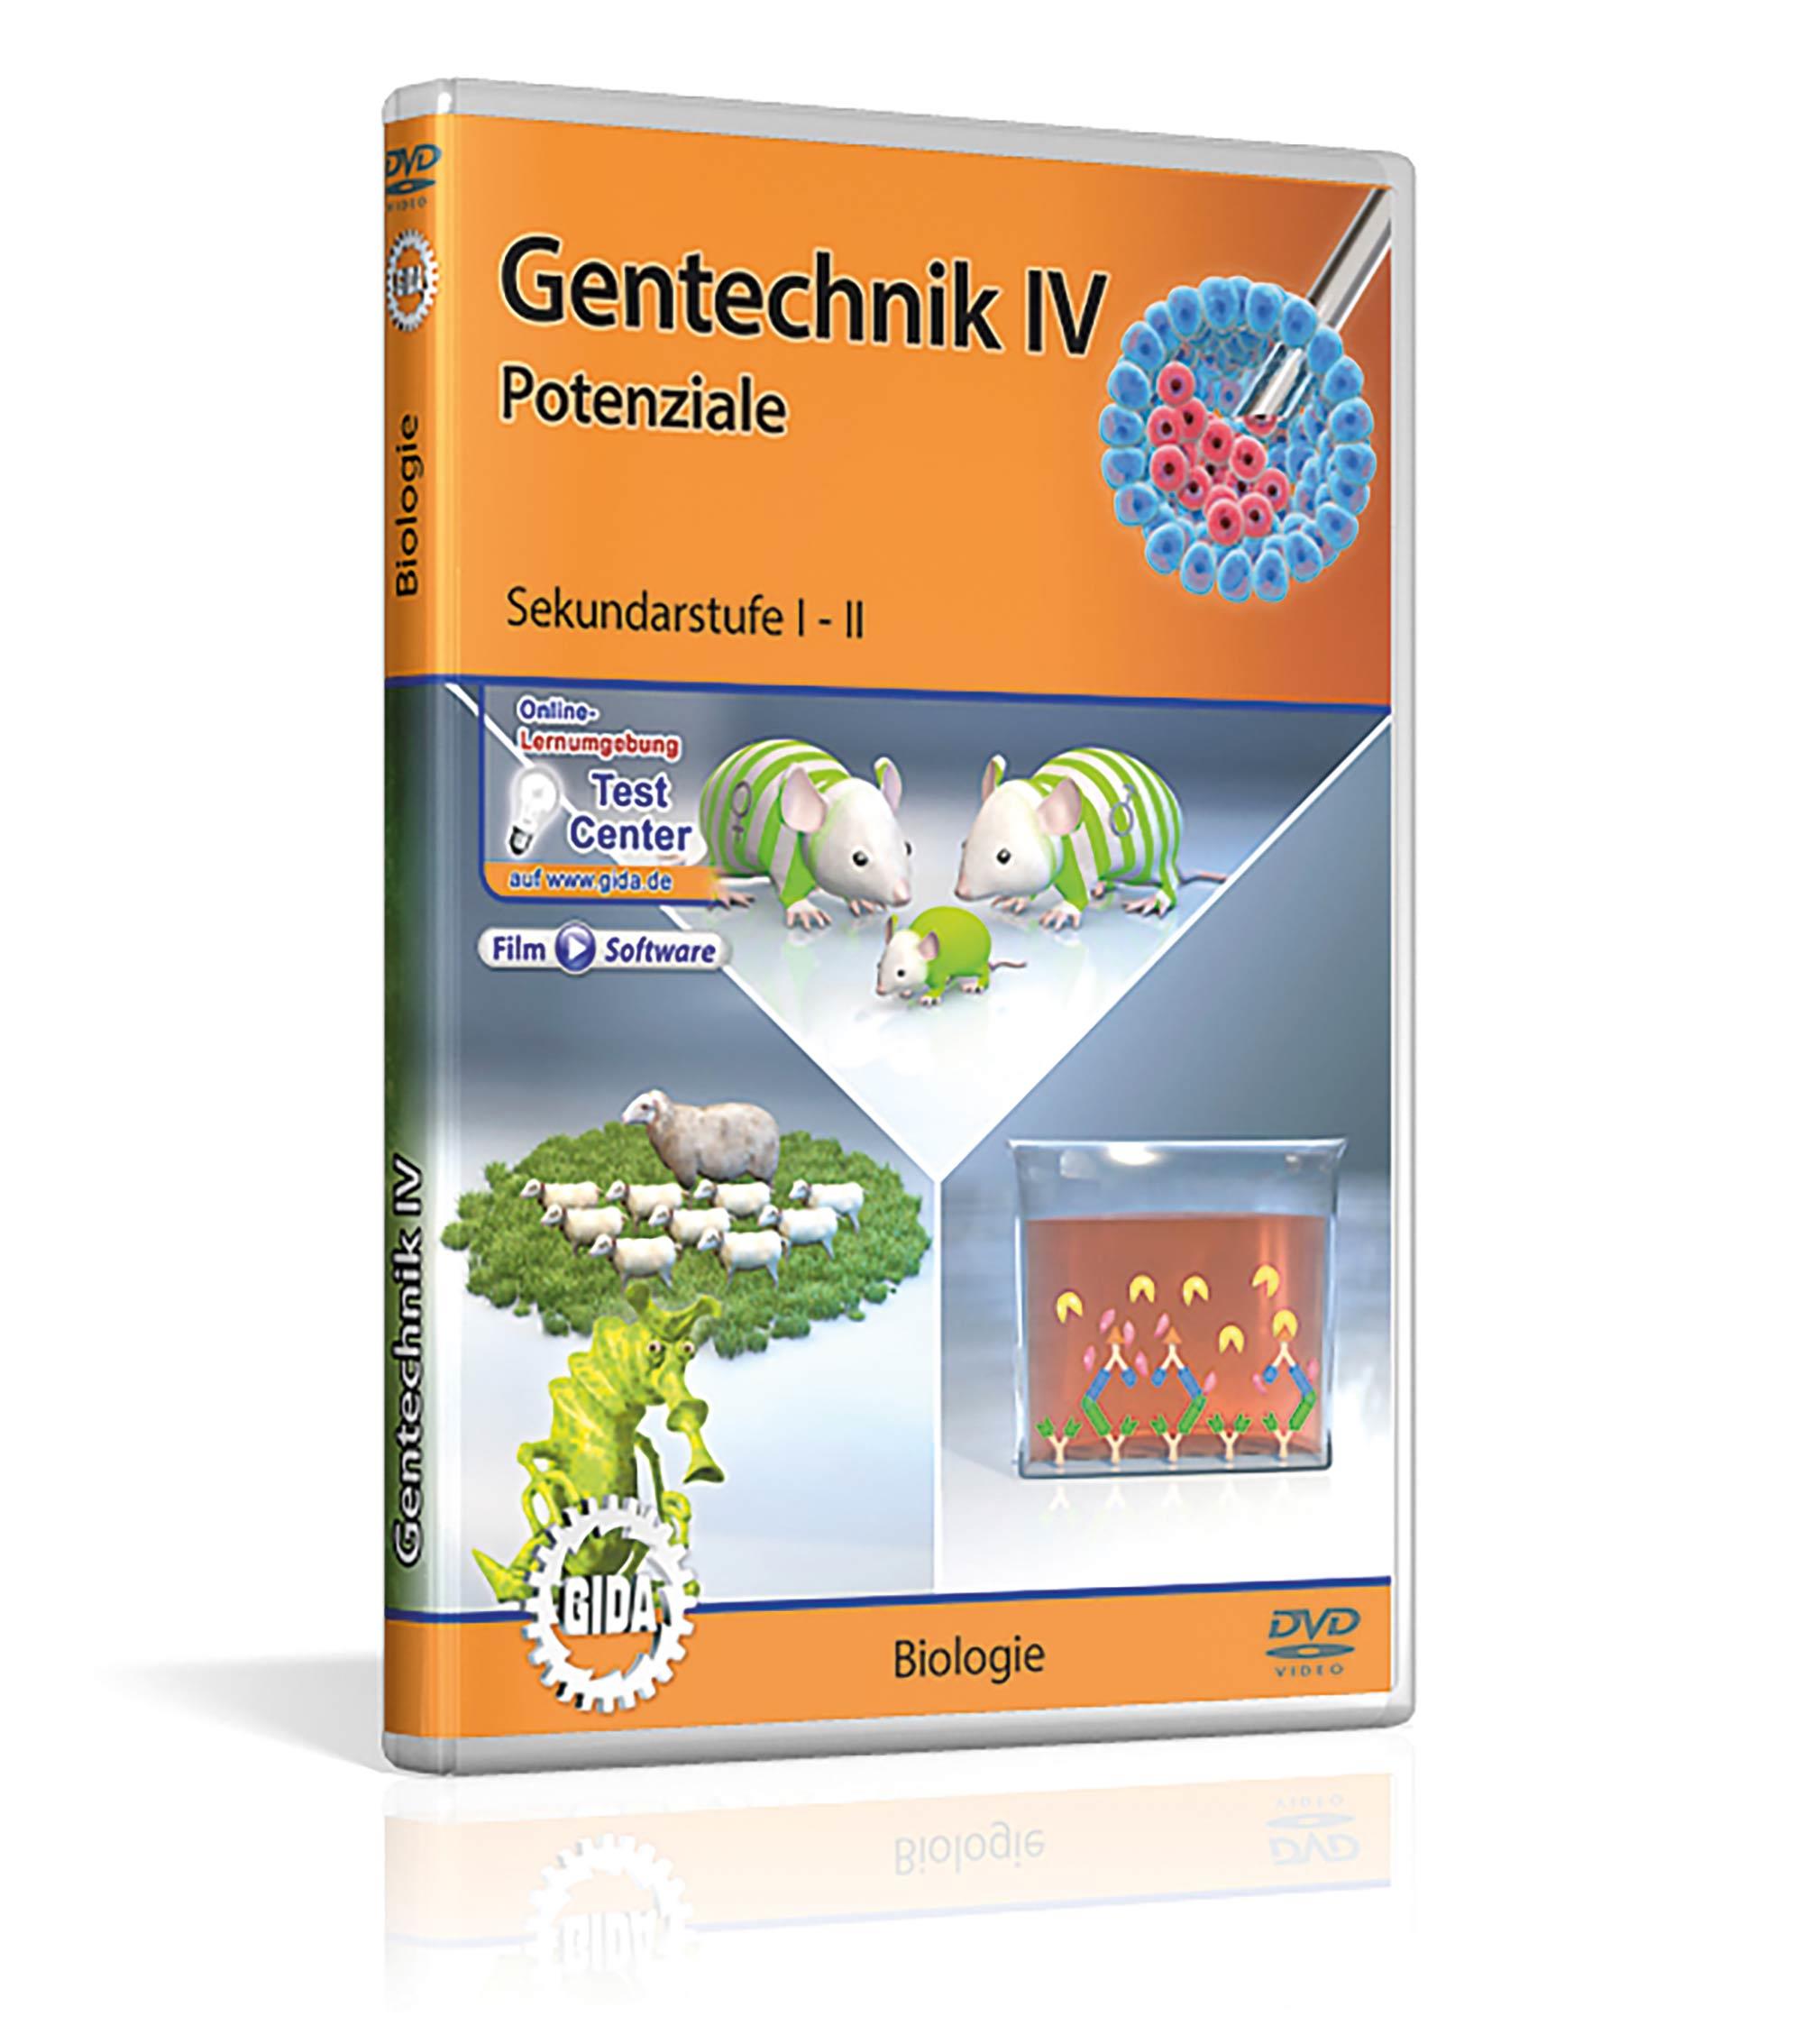 Gentechnik IV: Potenziale